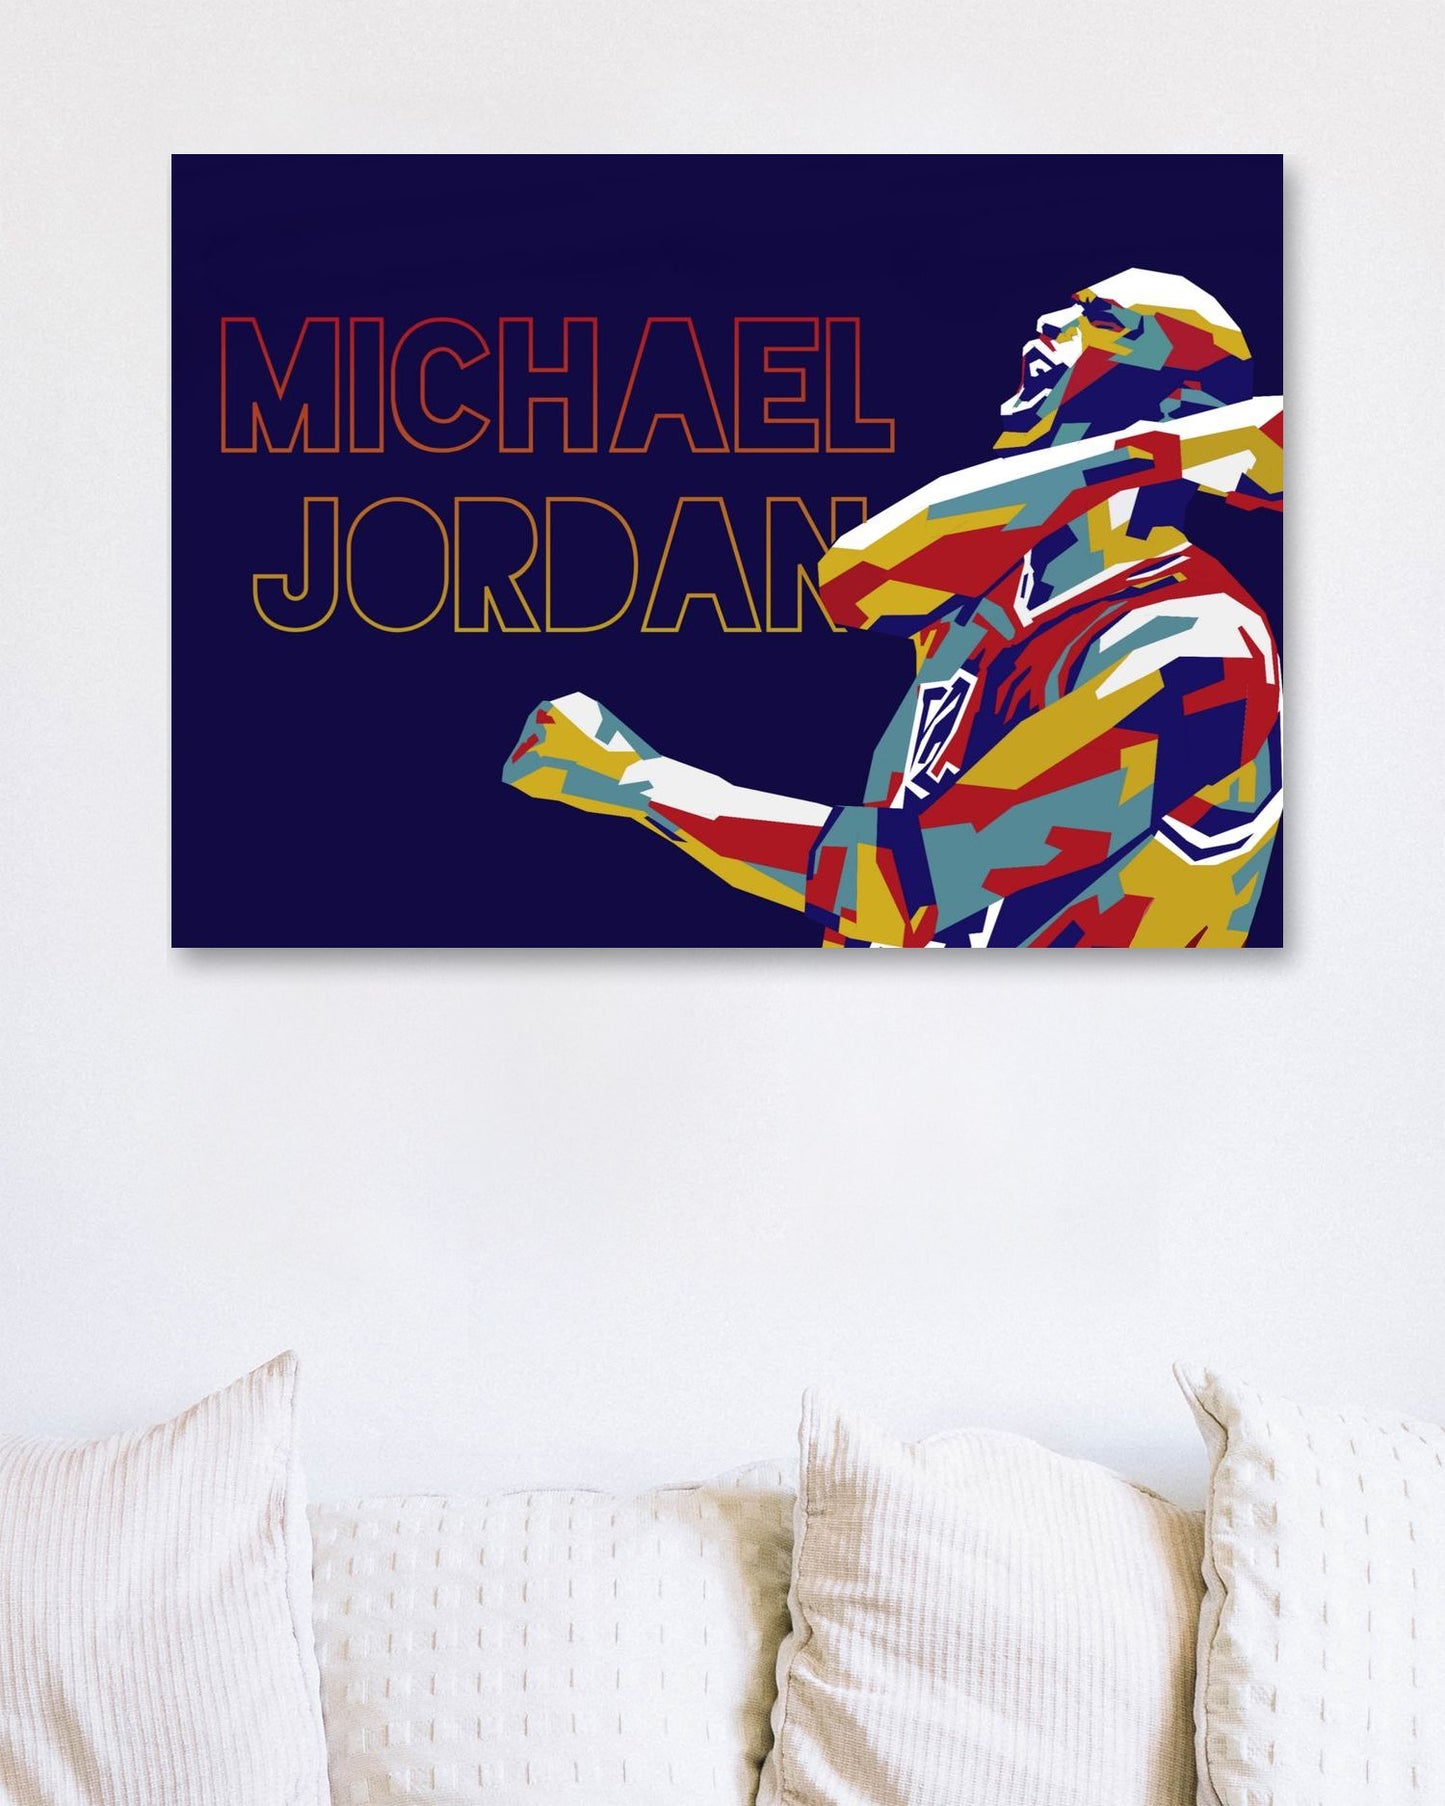 Michael Jordan - @widart